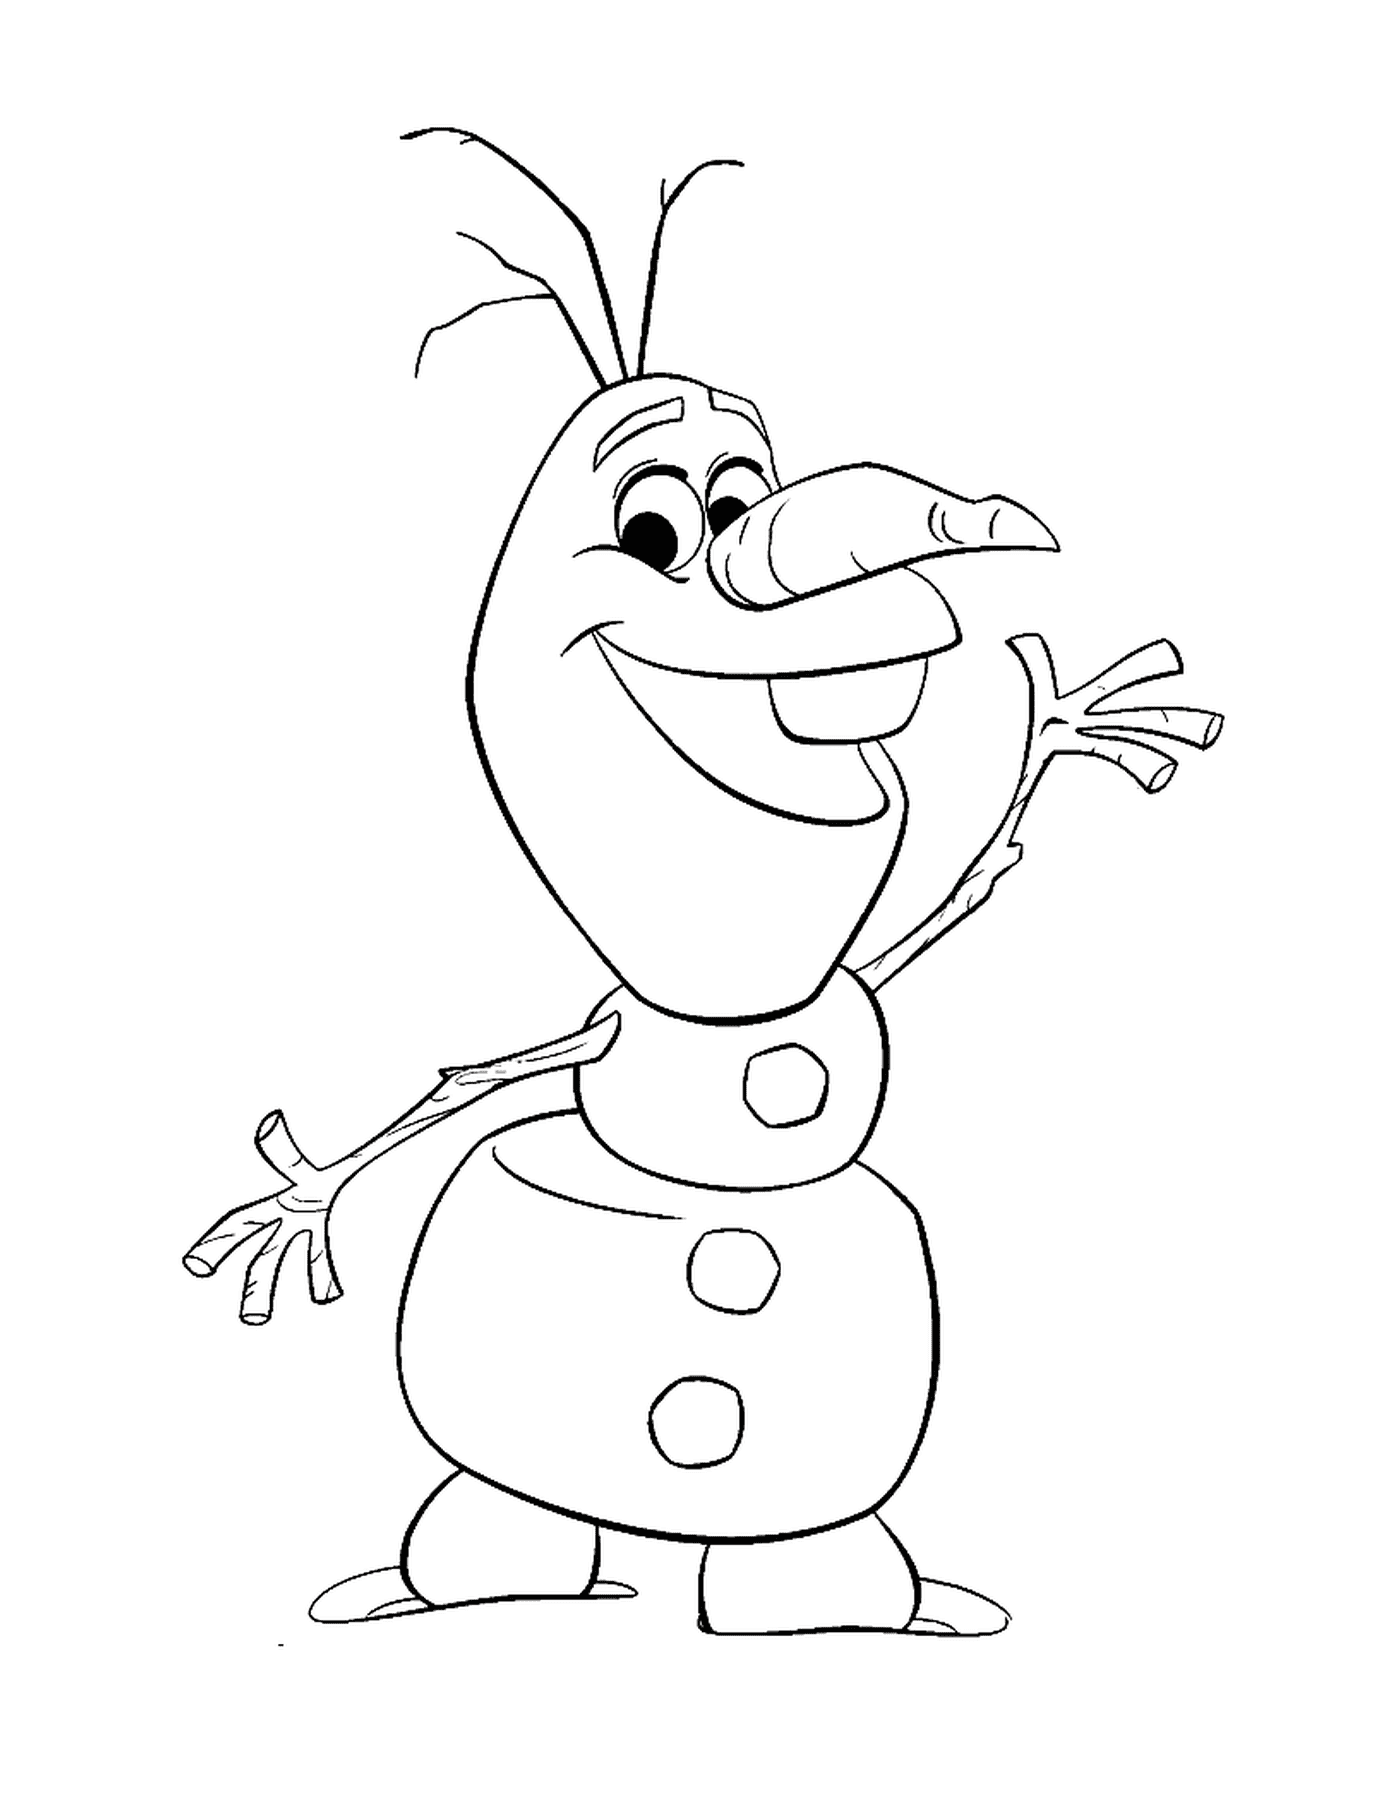  Olaf cute cartoon 